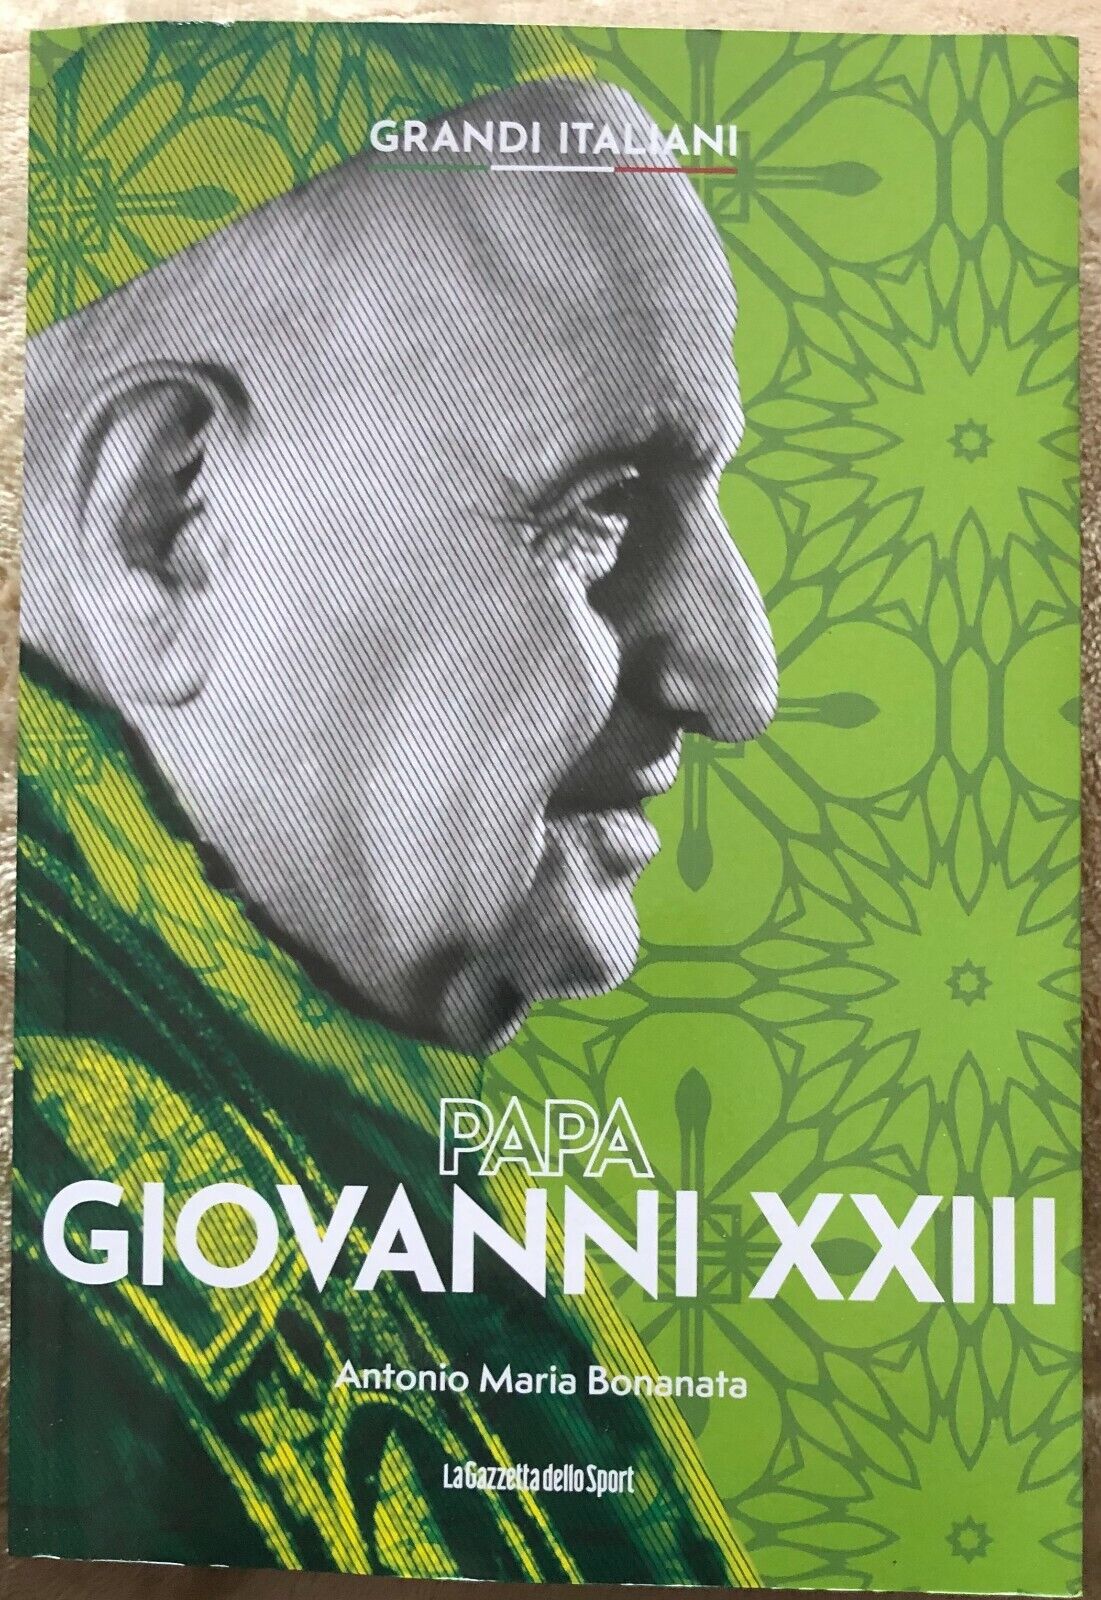 Grandi italiani n. 18 - Papa Giovanni XXIII di Antonio Maria Bonanata,  2022,  L